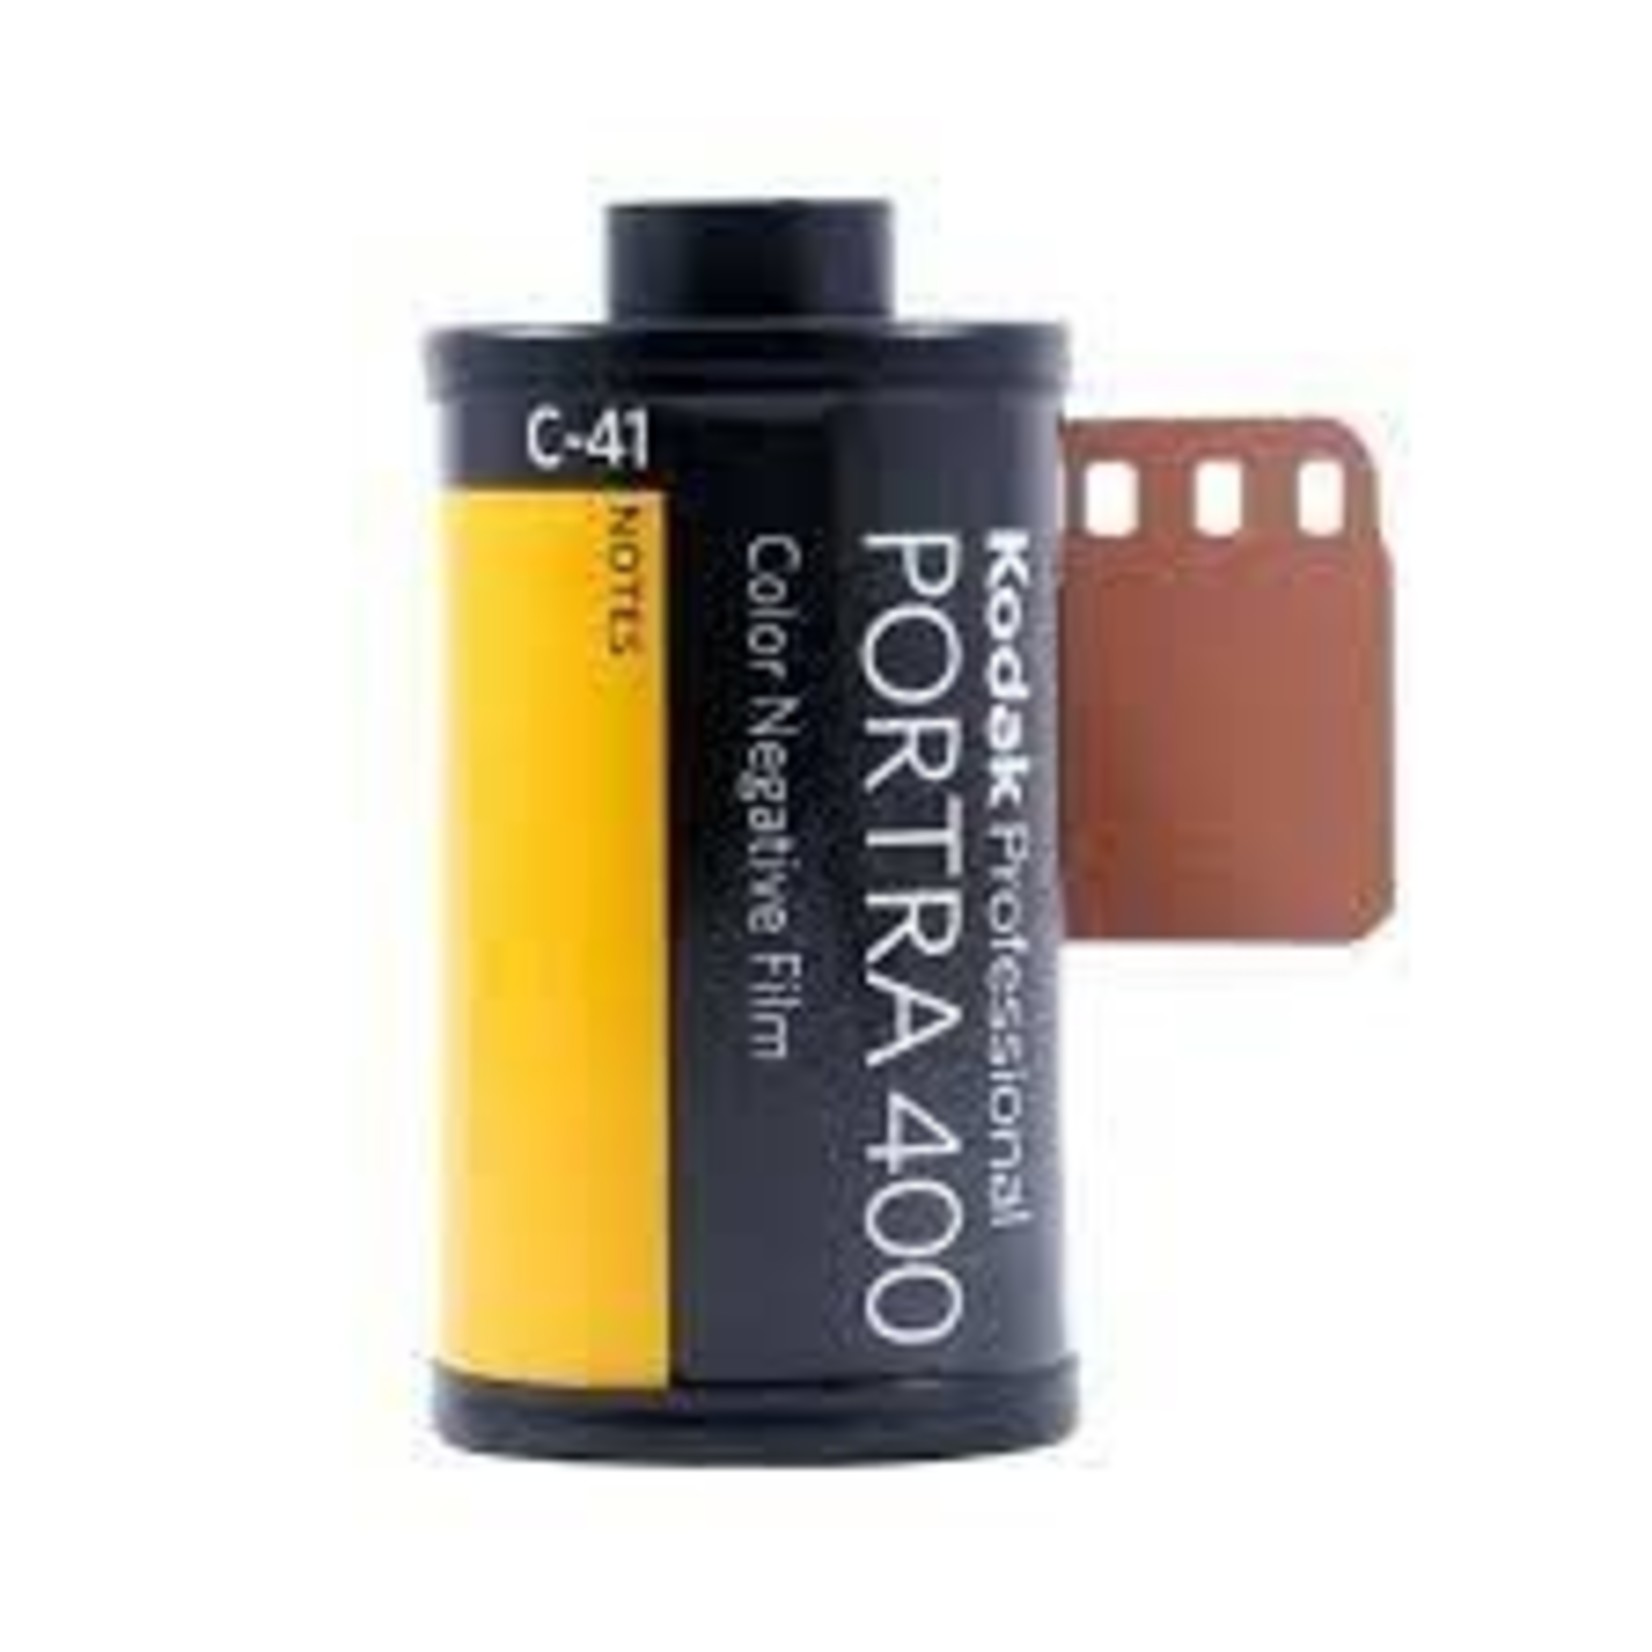 Kodak Kodak Portra 400 Color Negative Film 35mm Single Roll Film, 36 Exposures